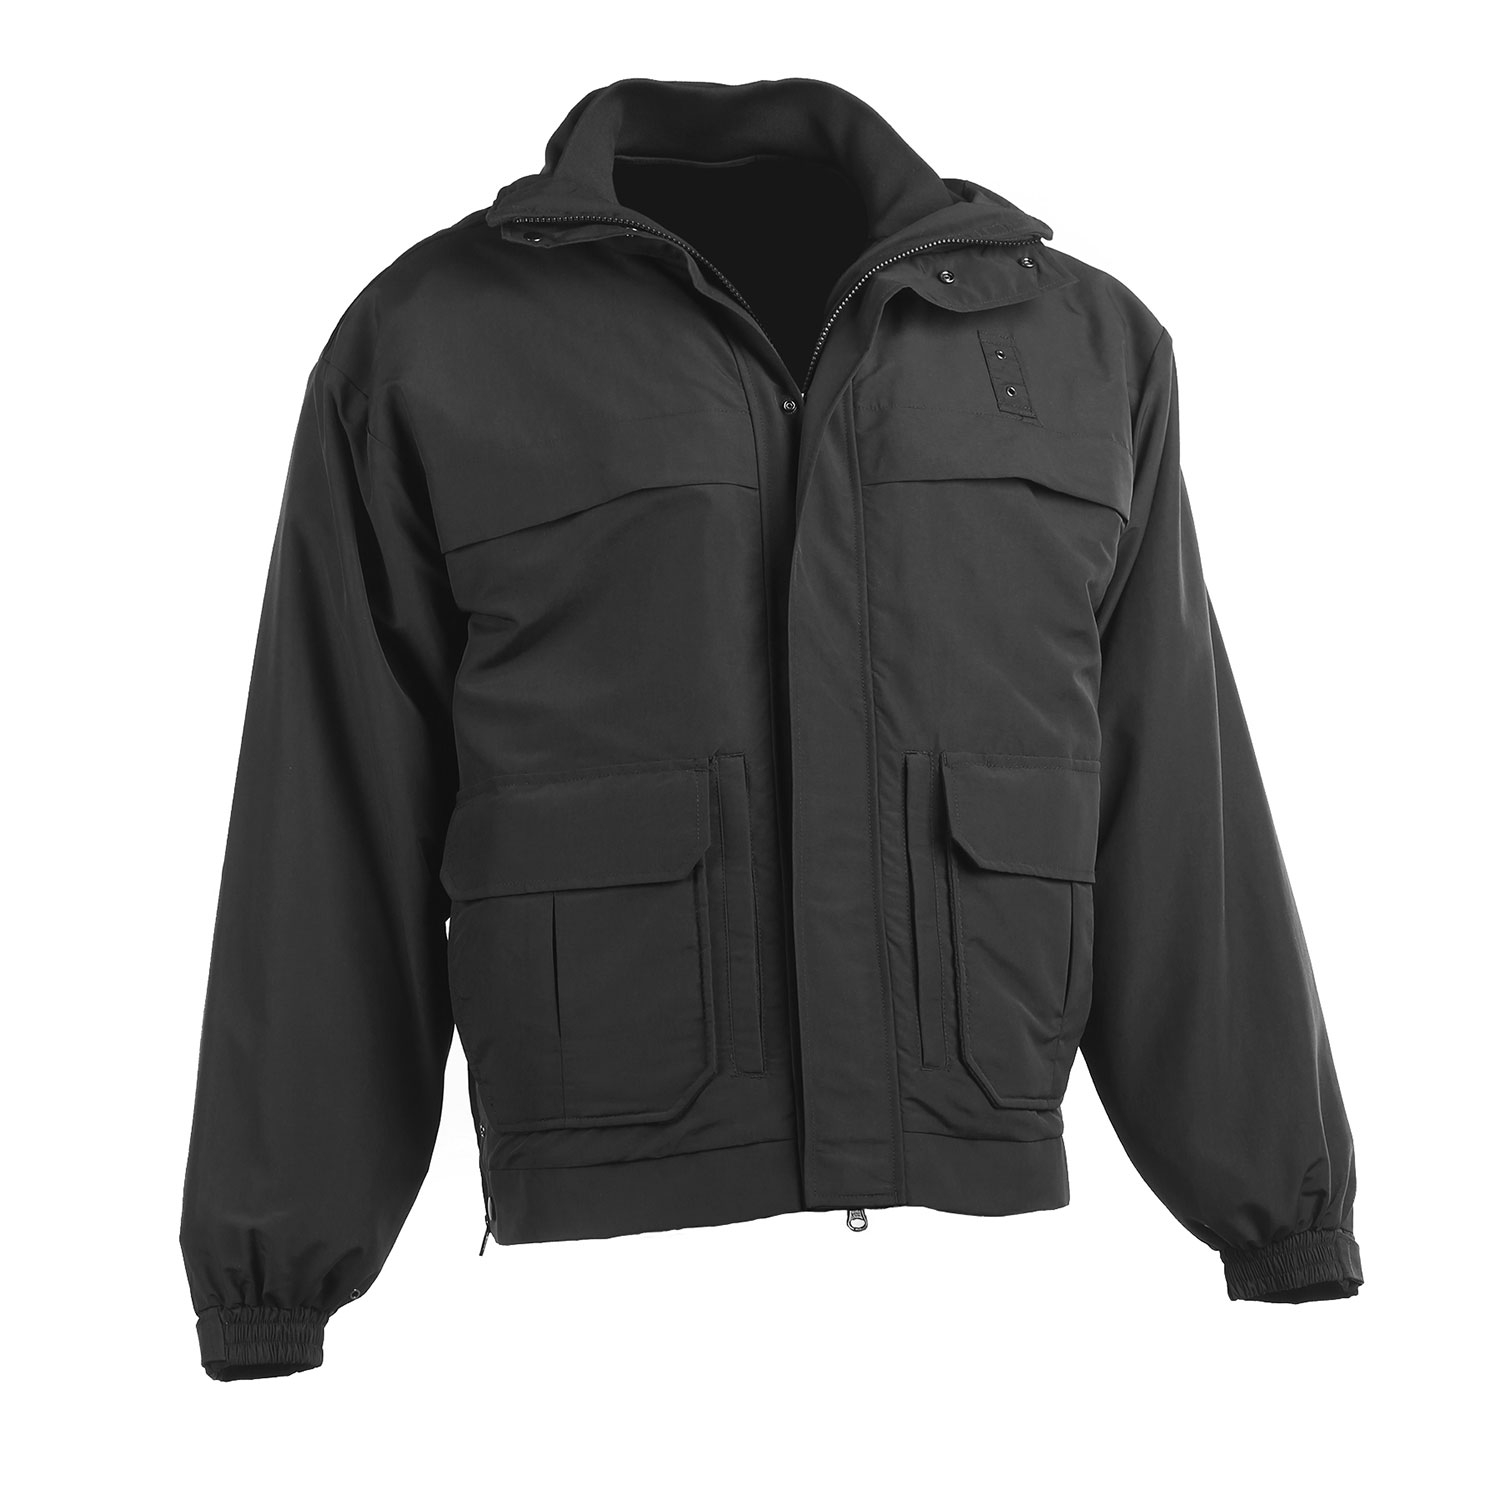 Flying Cross Endurance Jacket w/ GoreTex & Thinsulate Liner